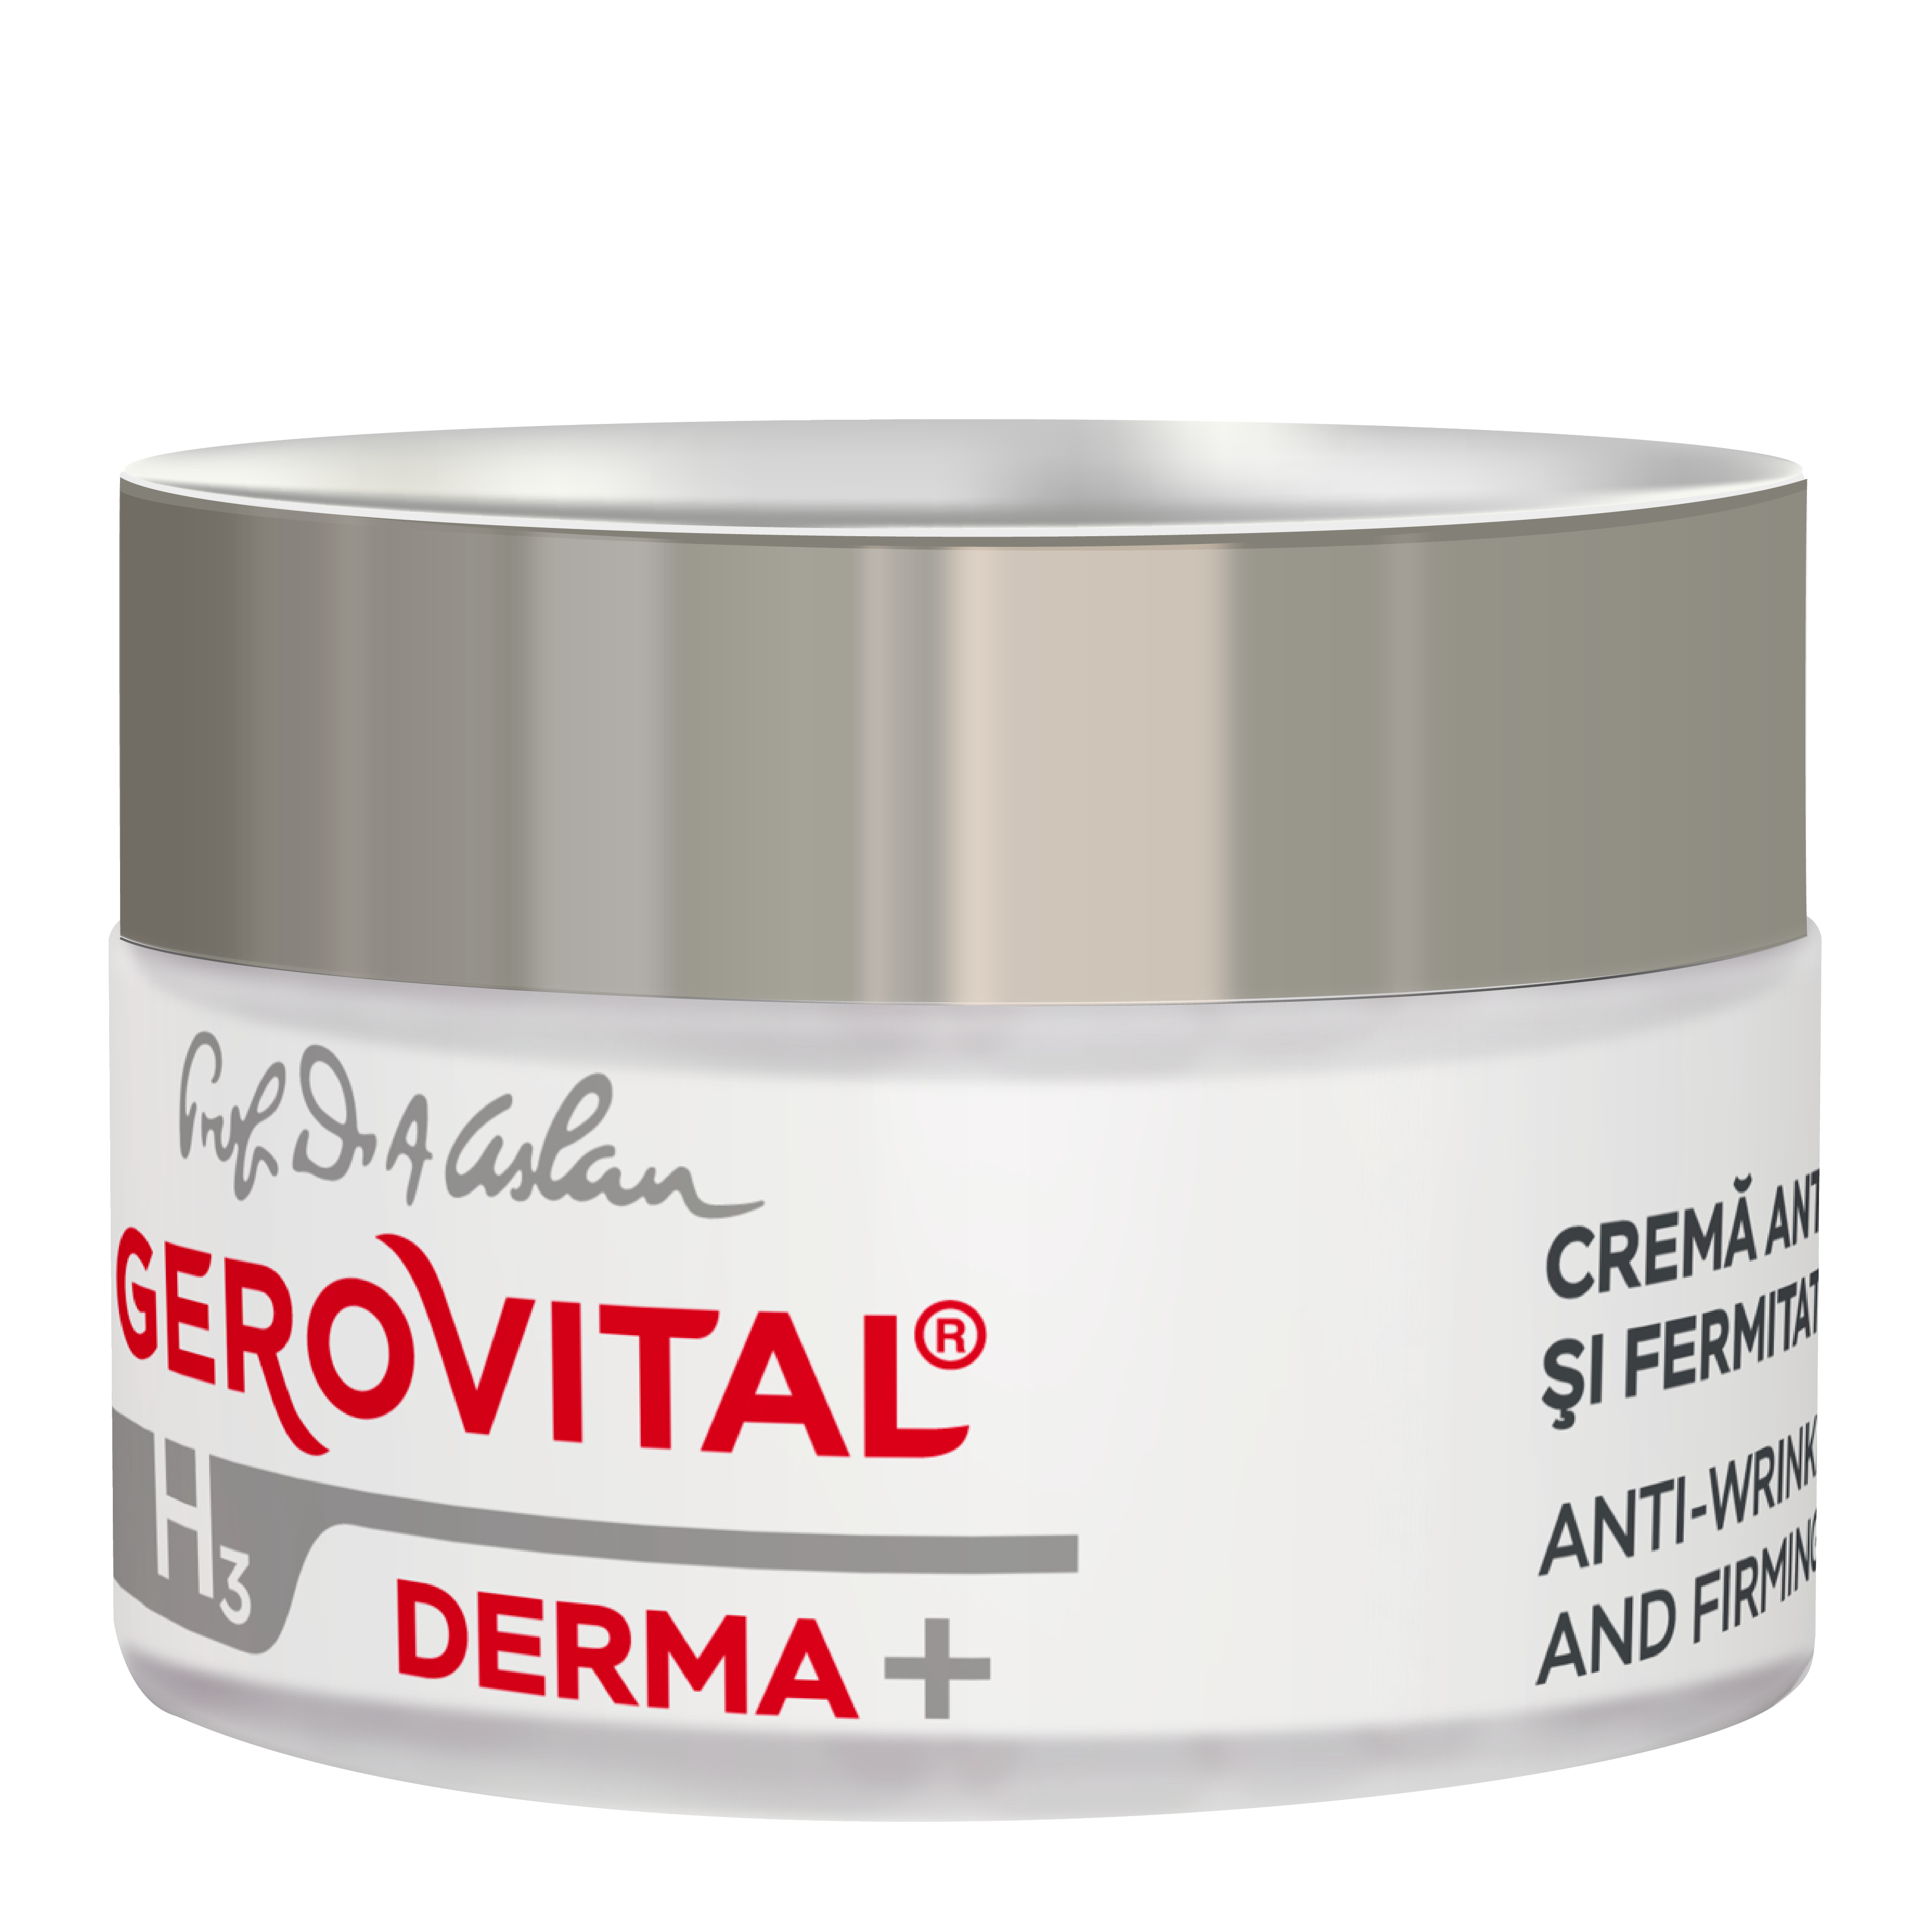 Crema antirid si fermitate Gerovital H3 Derma+, 50 ml, Farmec 569873